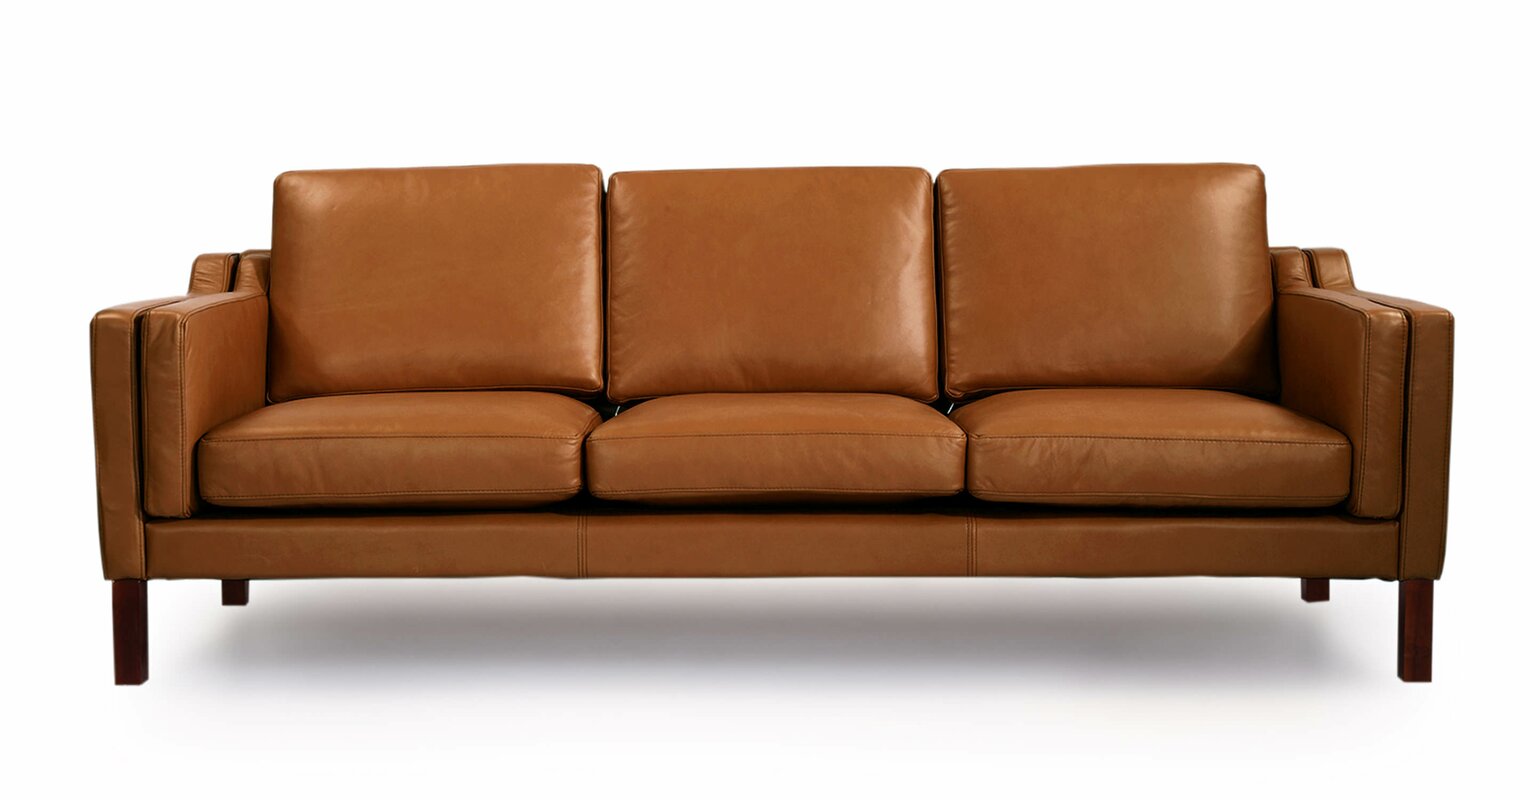 Rolando Mid Century Modern Leather Sofa